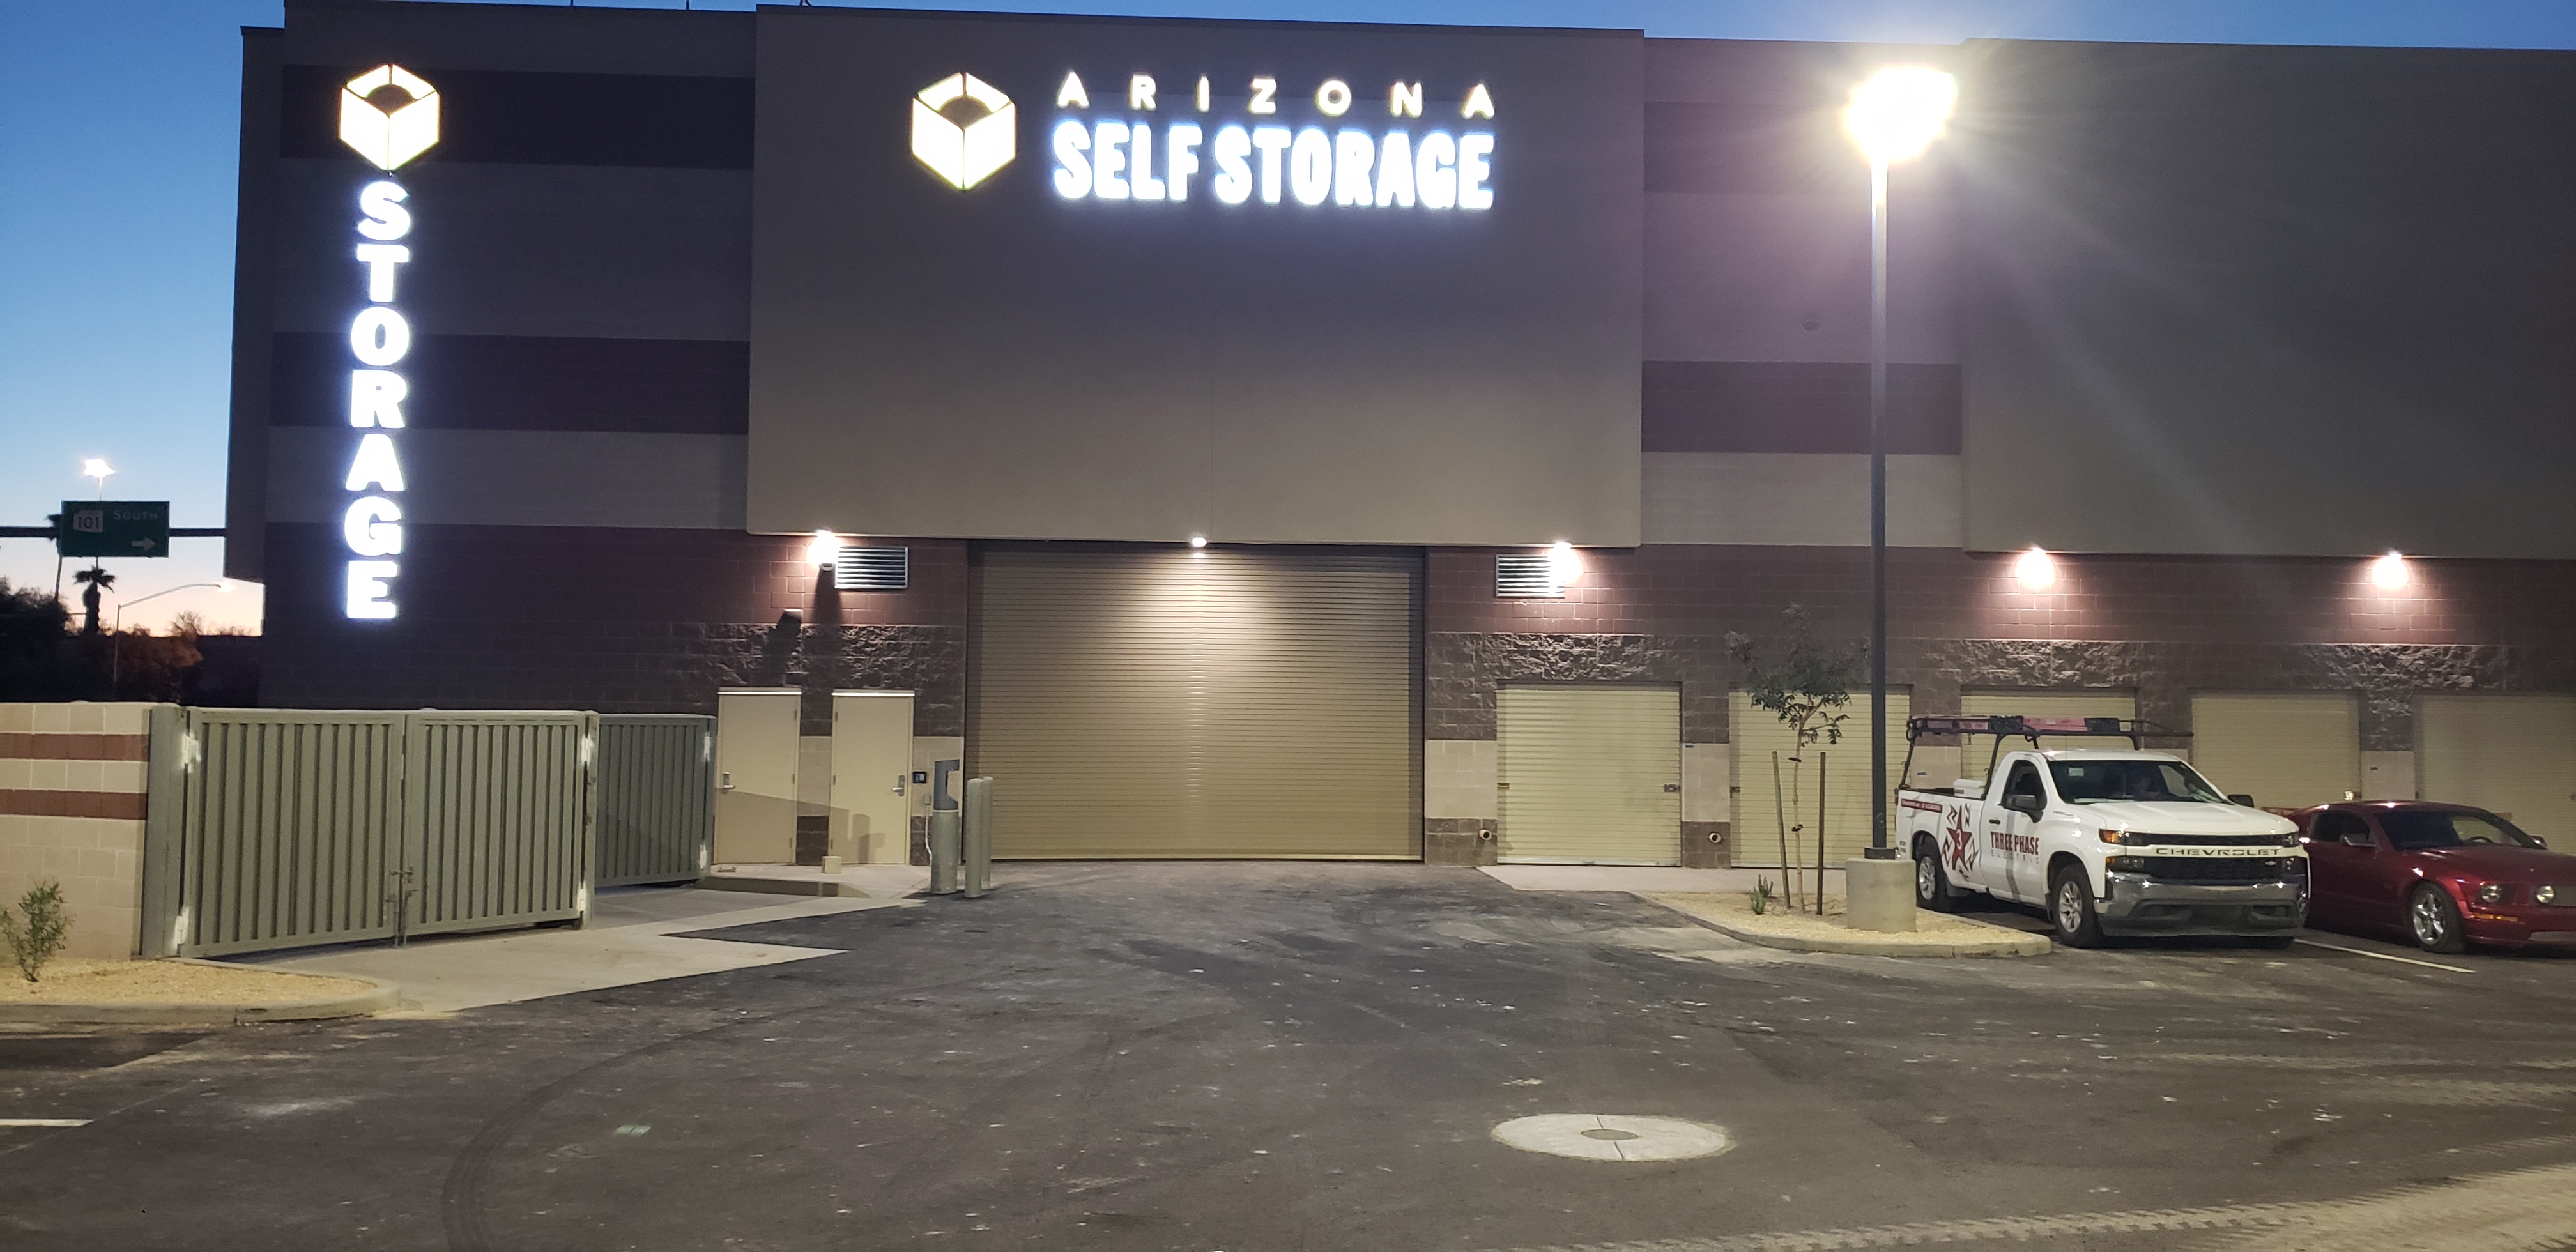 Press Release - Introducing Arizona Self Storage at Peoria: Arizona's Premier Storage Solution with Unparalleled Amenities